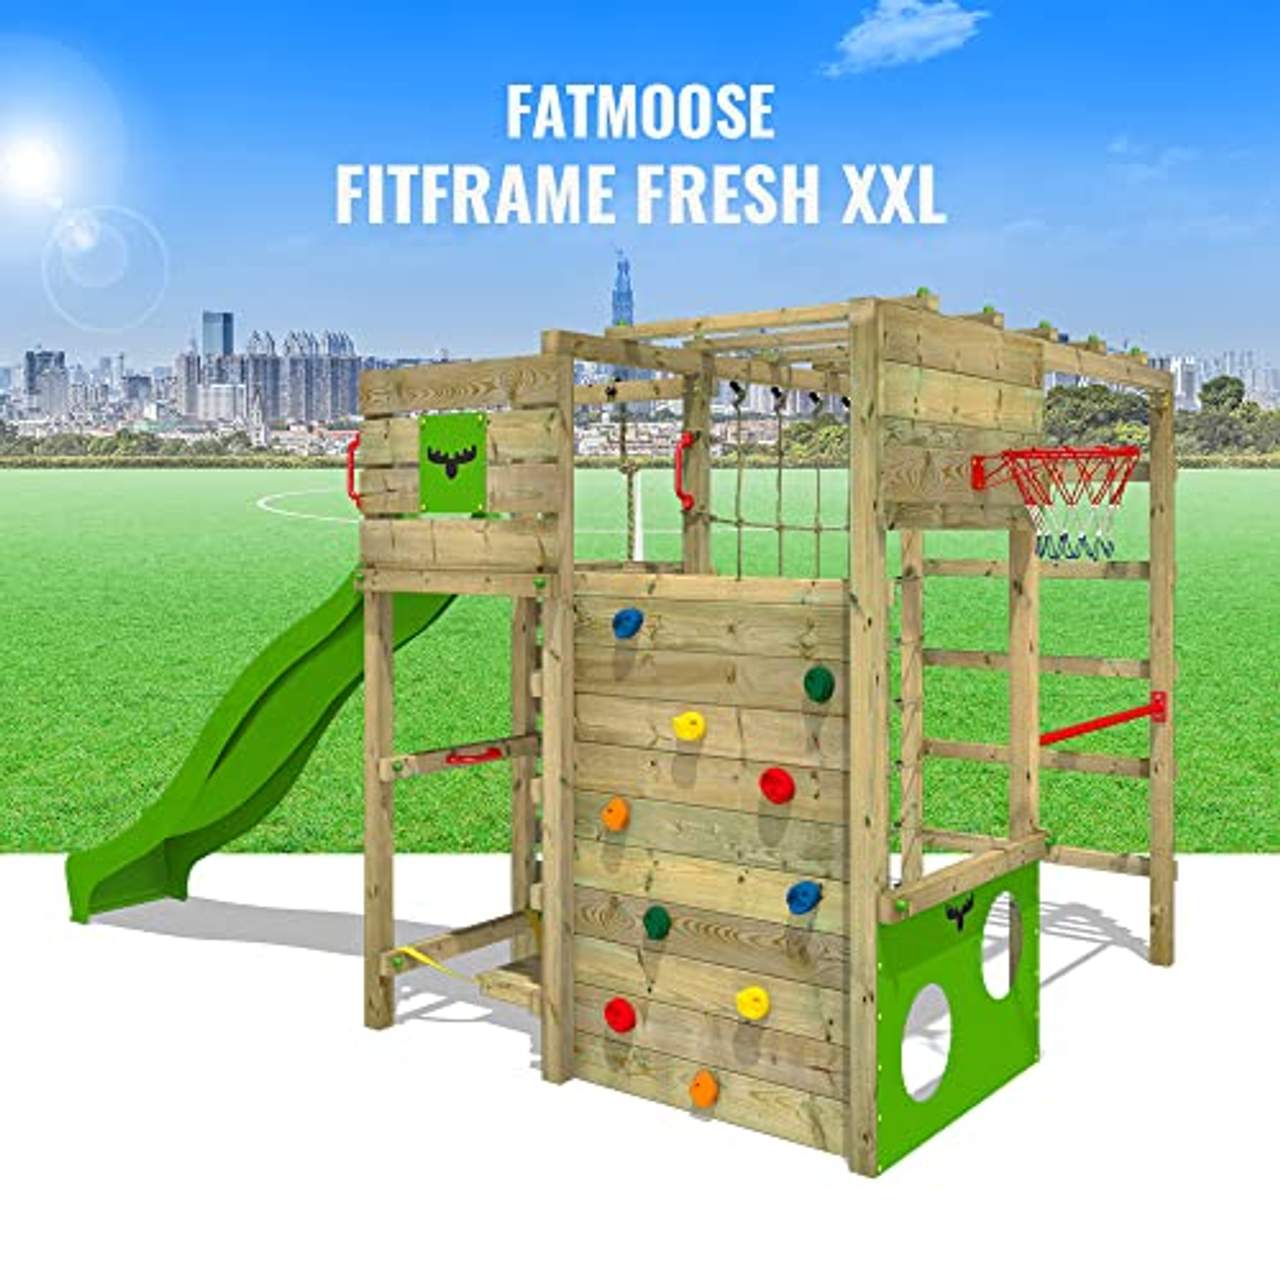 Fatmoose Klettergerüst FitFrame Fresh XXL